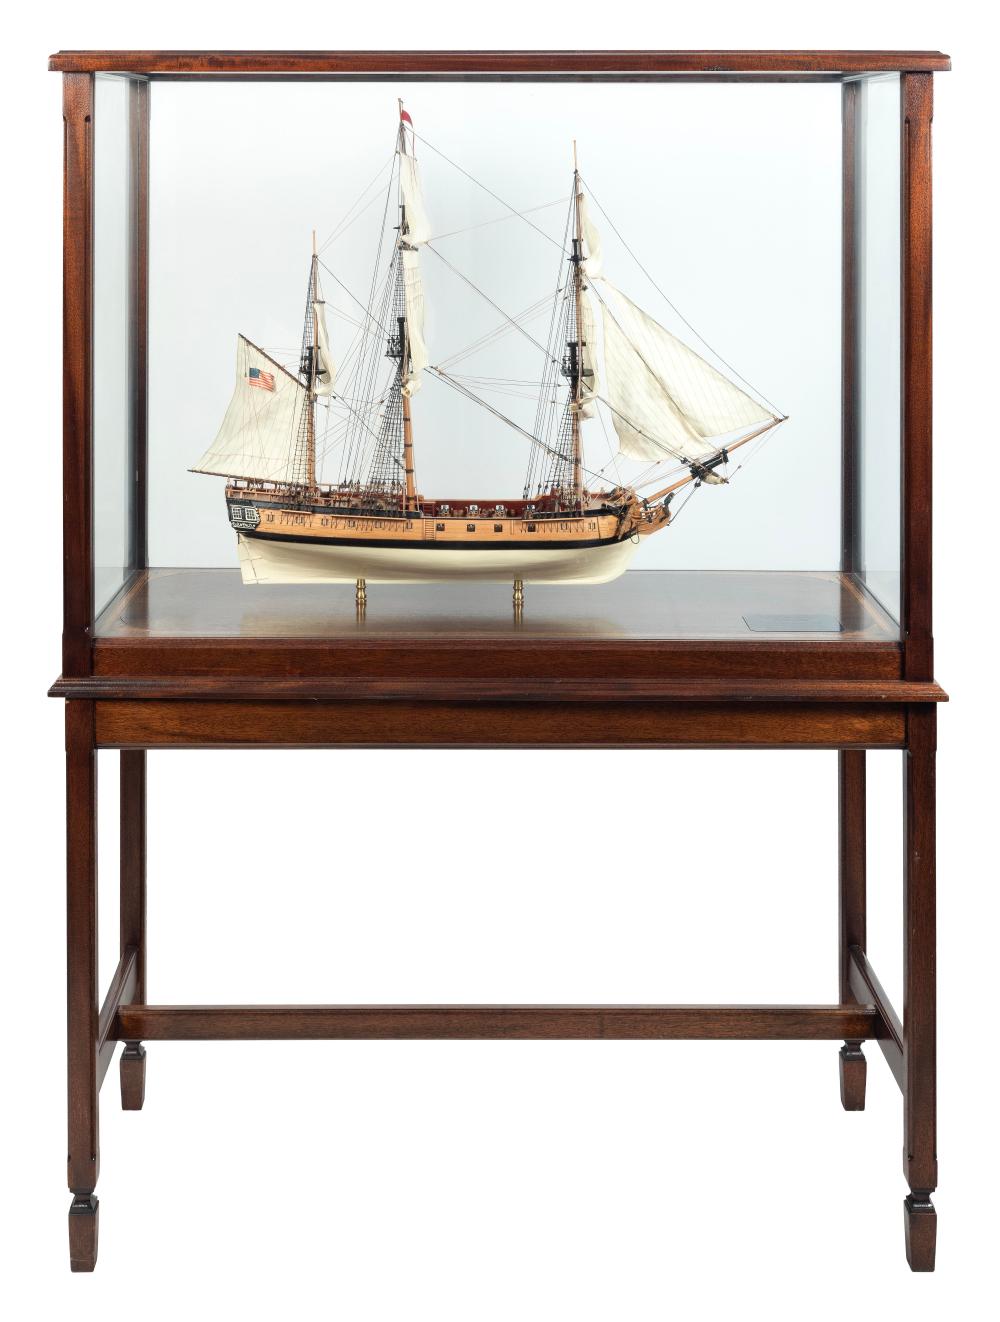 CASED MODEL OF THE SHIP "BOSTON"